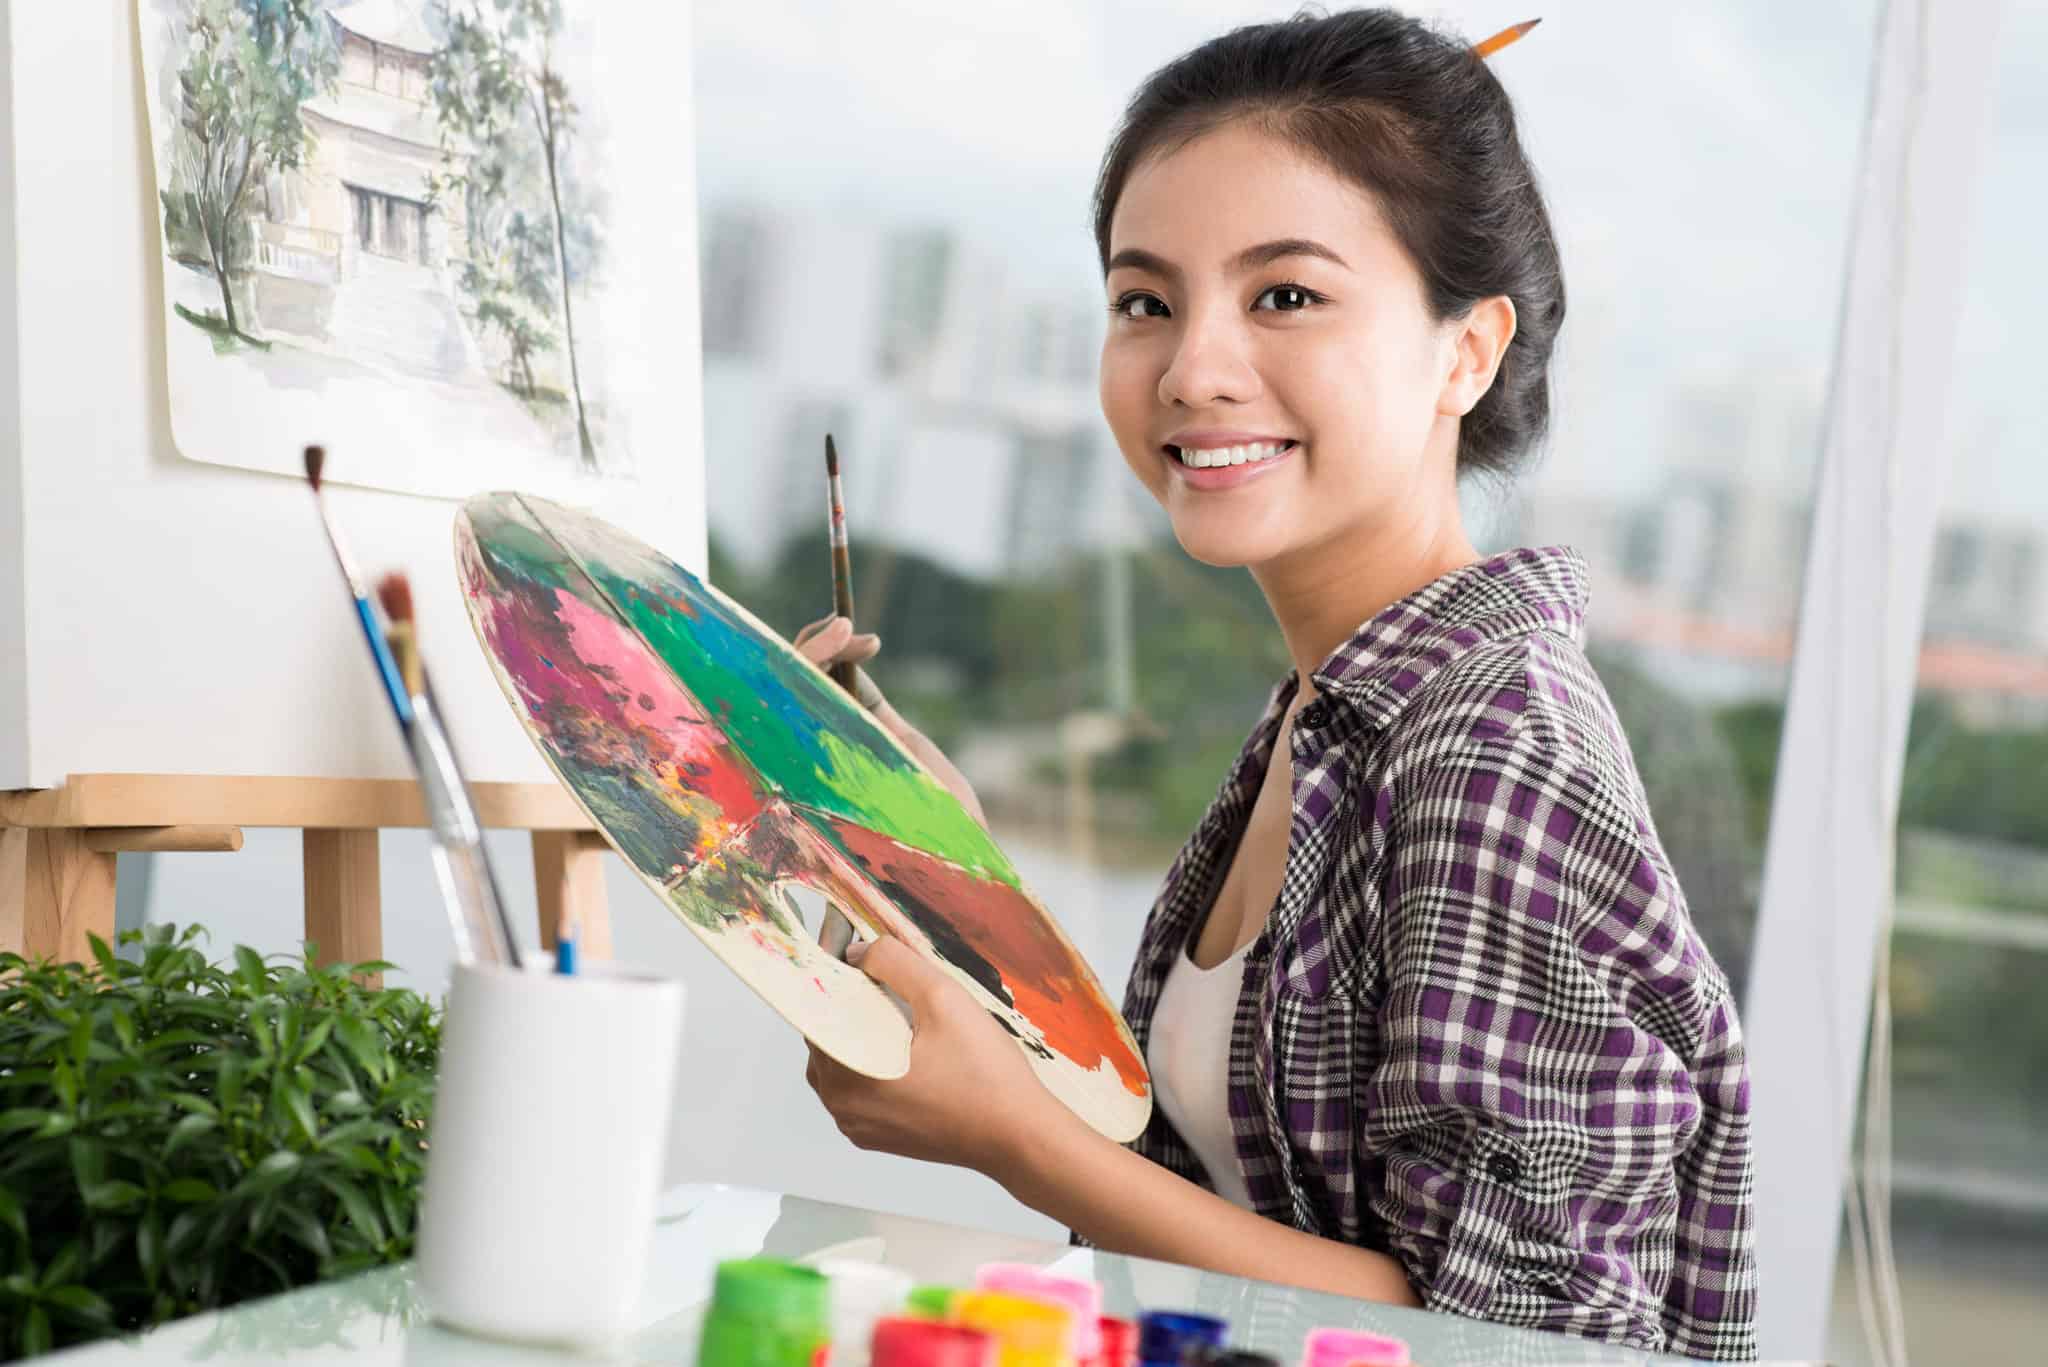 How Art Benefits Your Mental Health